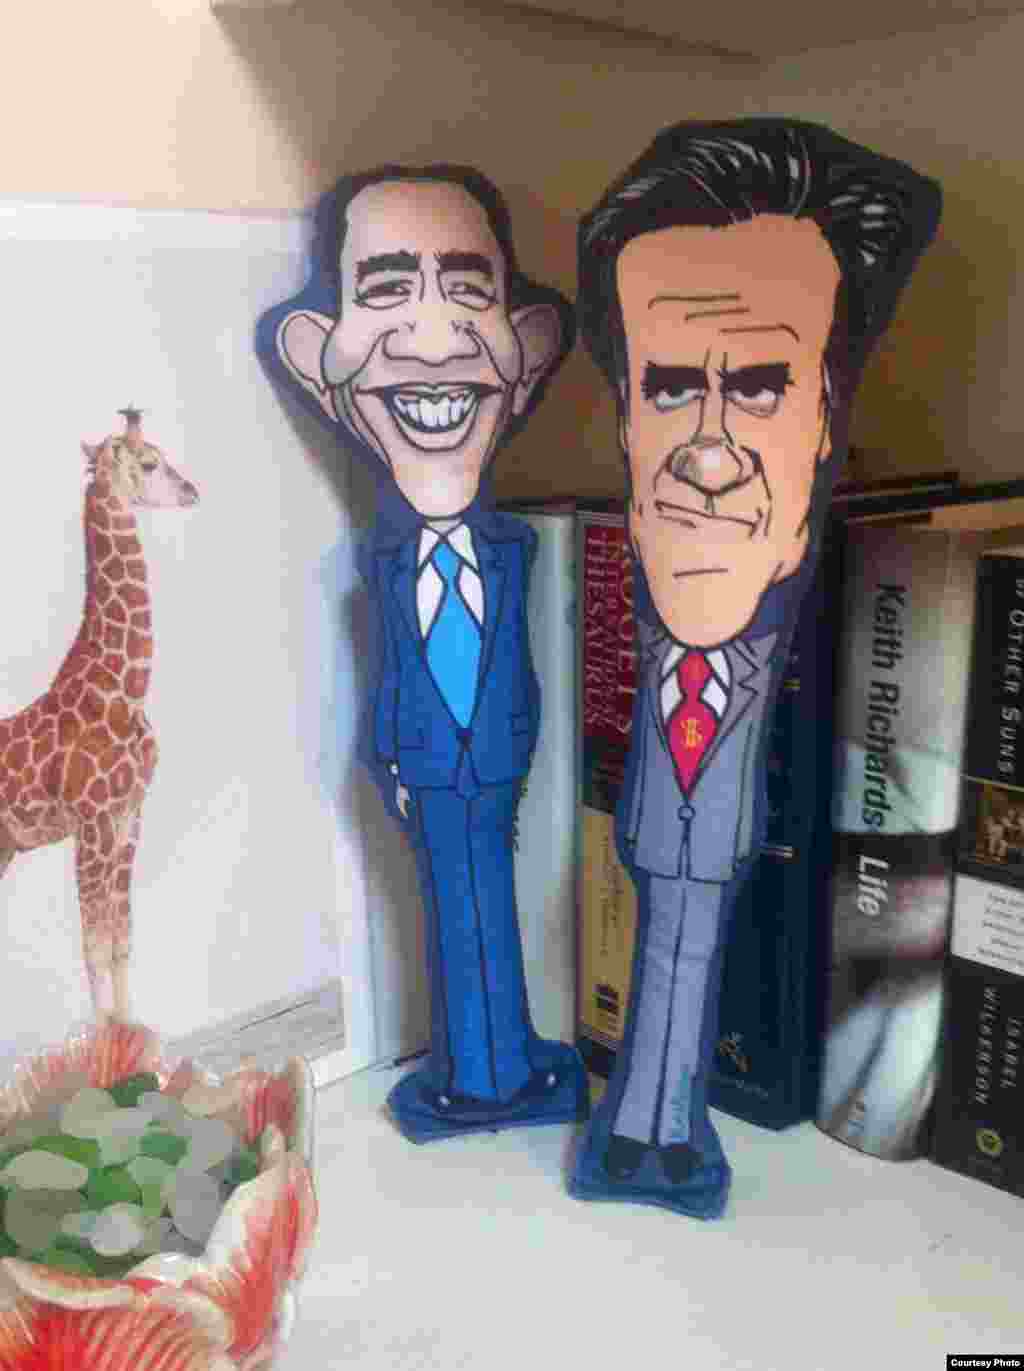 Obama and Romney dog chew toys